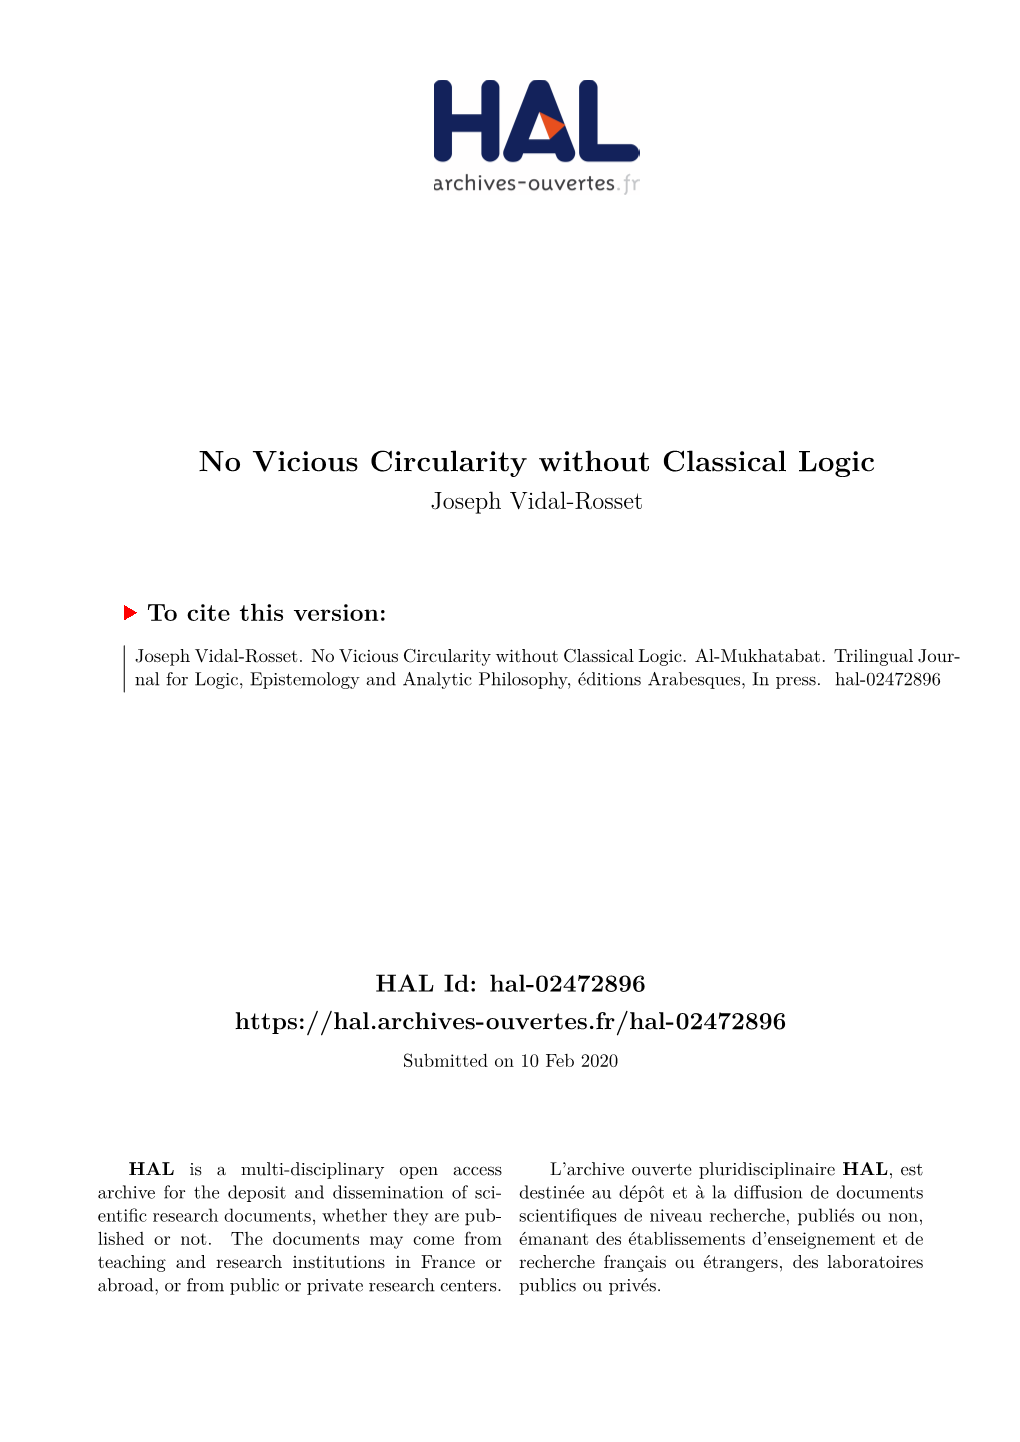 No Vicious Circularity Without Classical Logic Joseph Vidal-Rosset